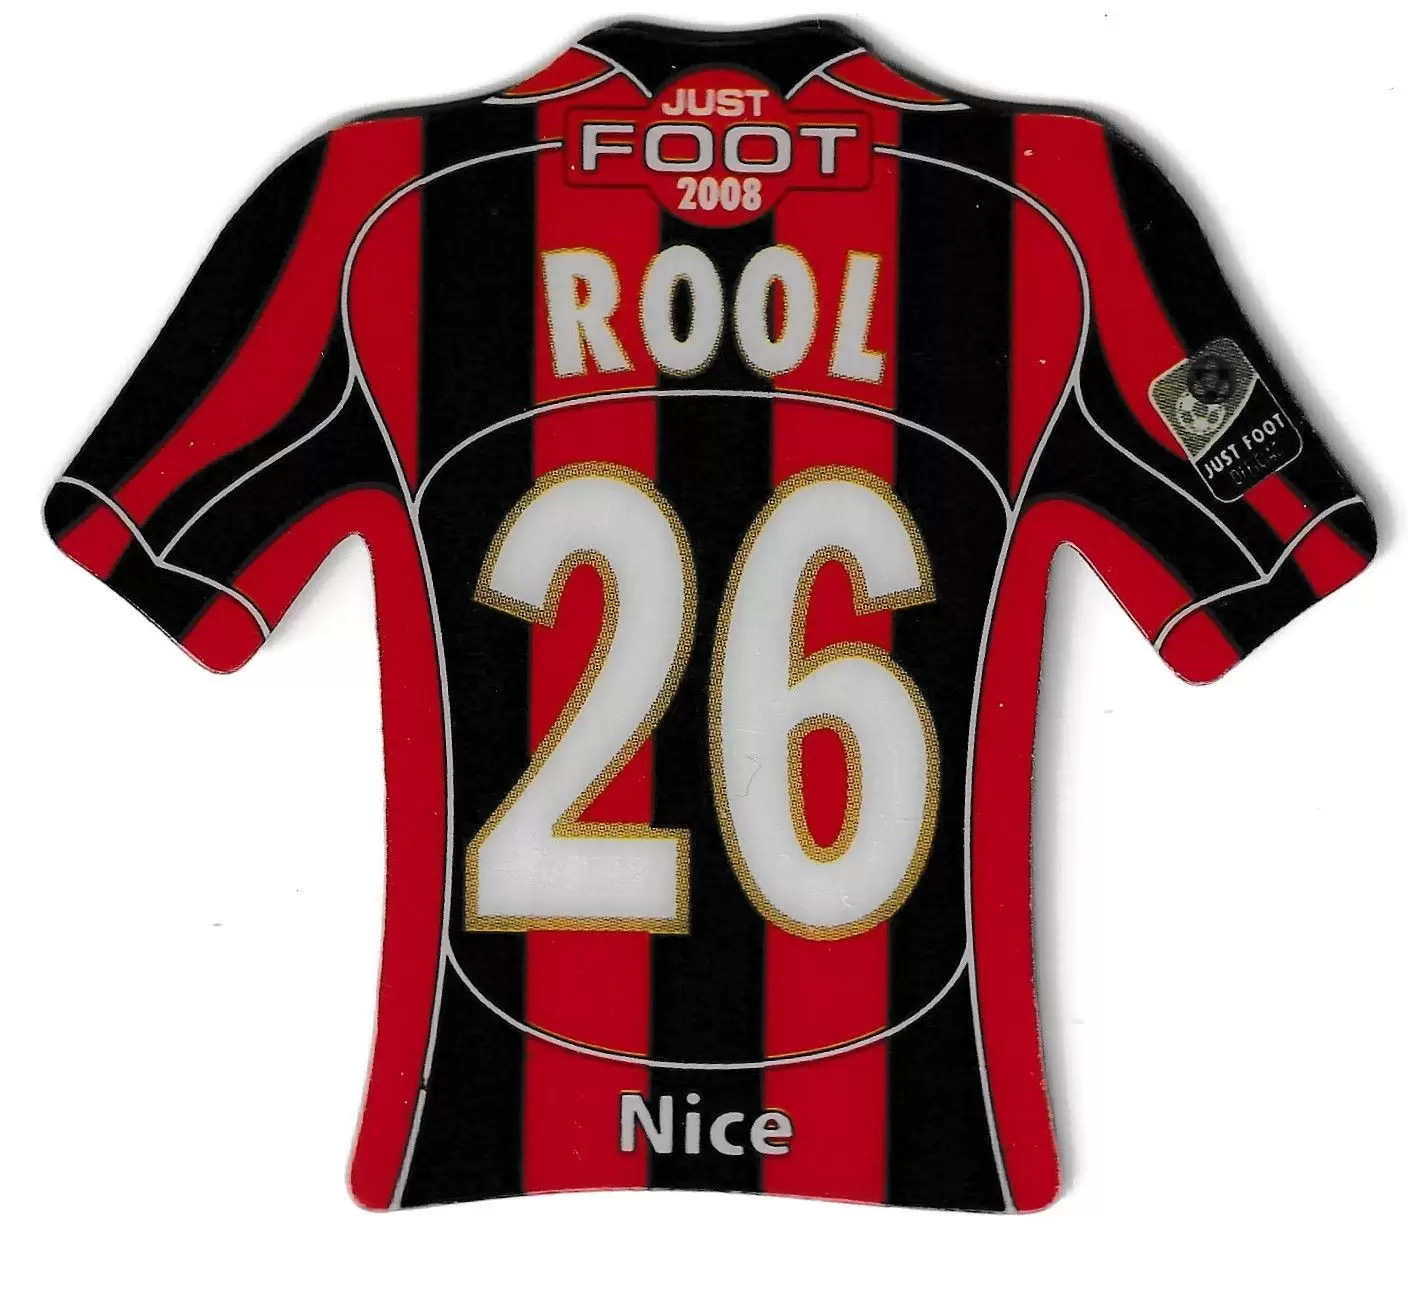 Just Foot 2008 - Nice 26 - Rool